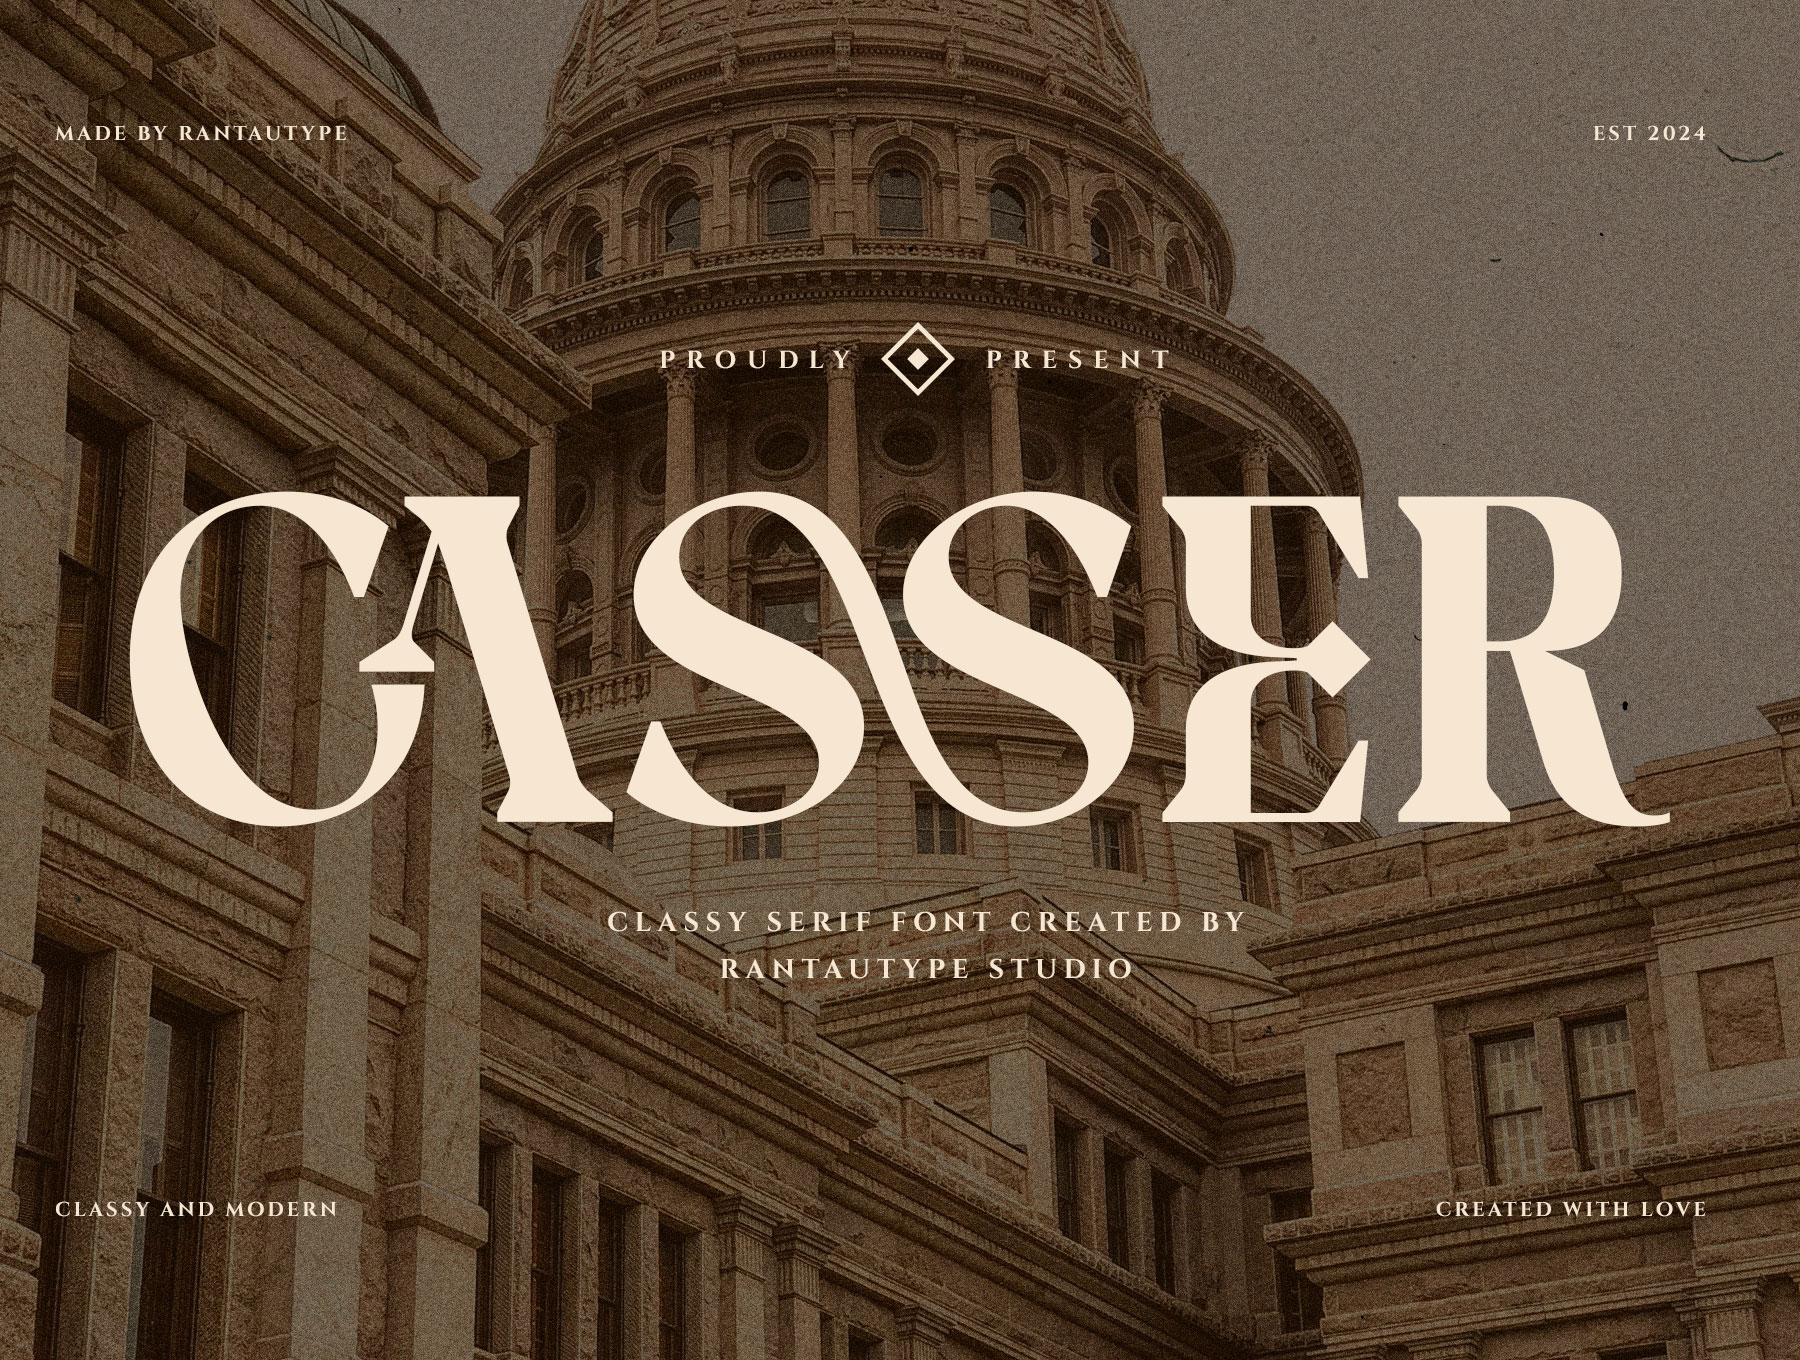 Casser Classy Serif Font